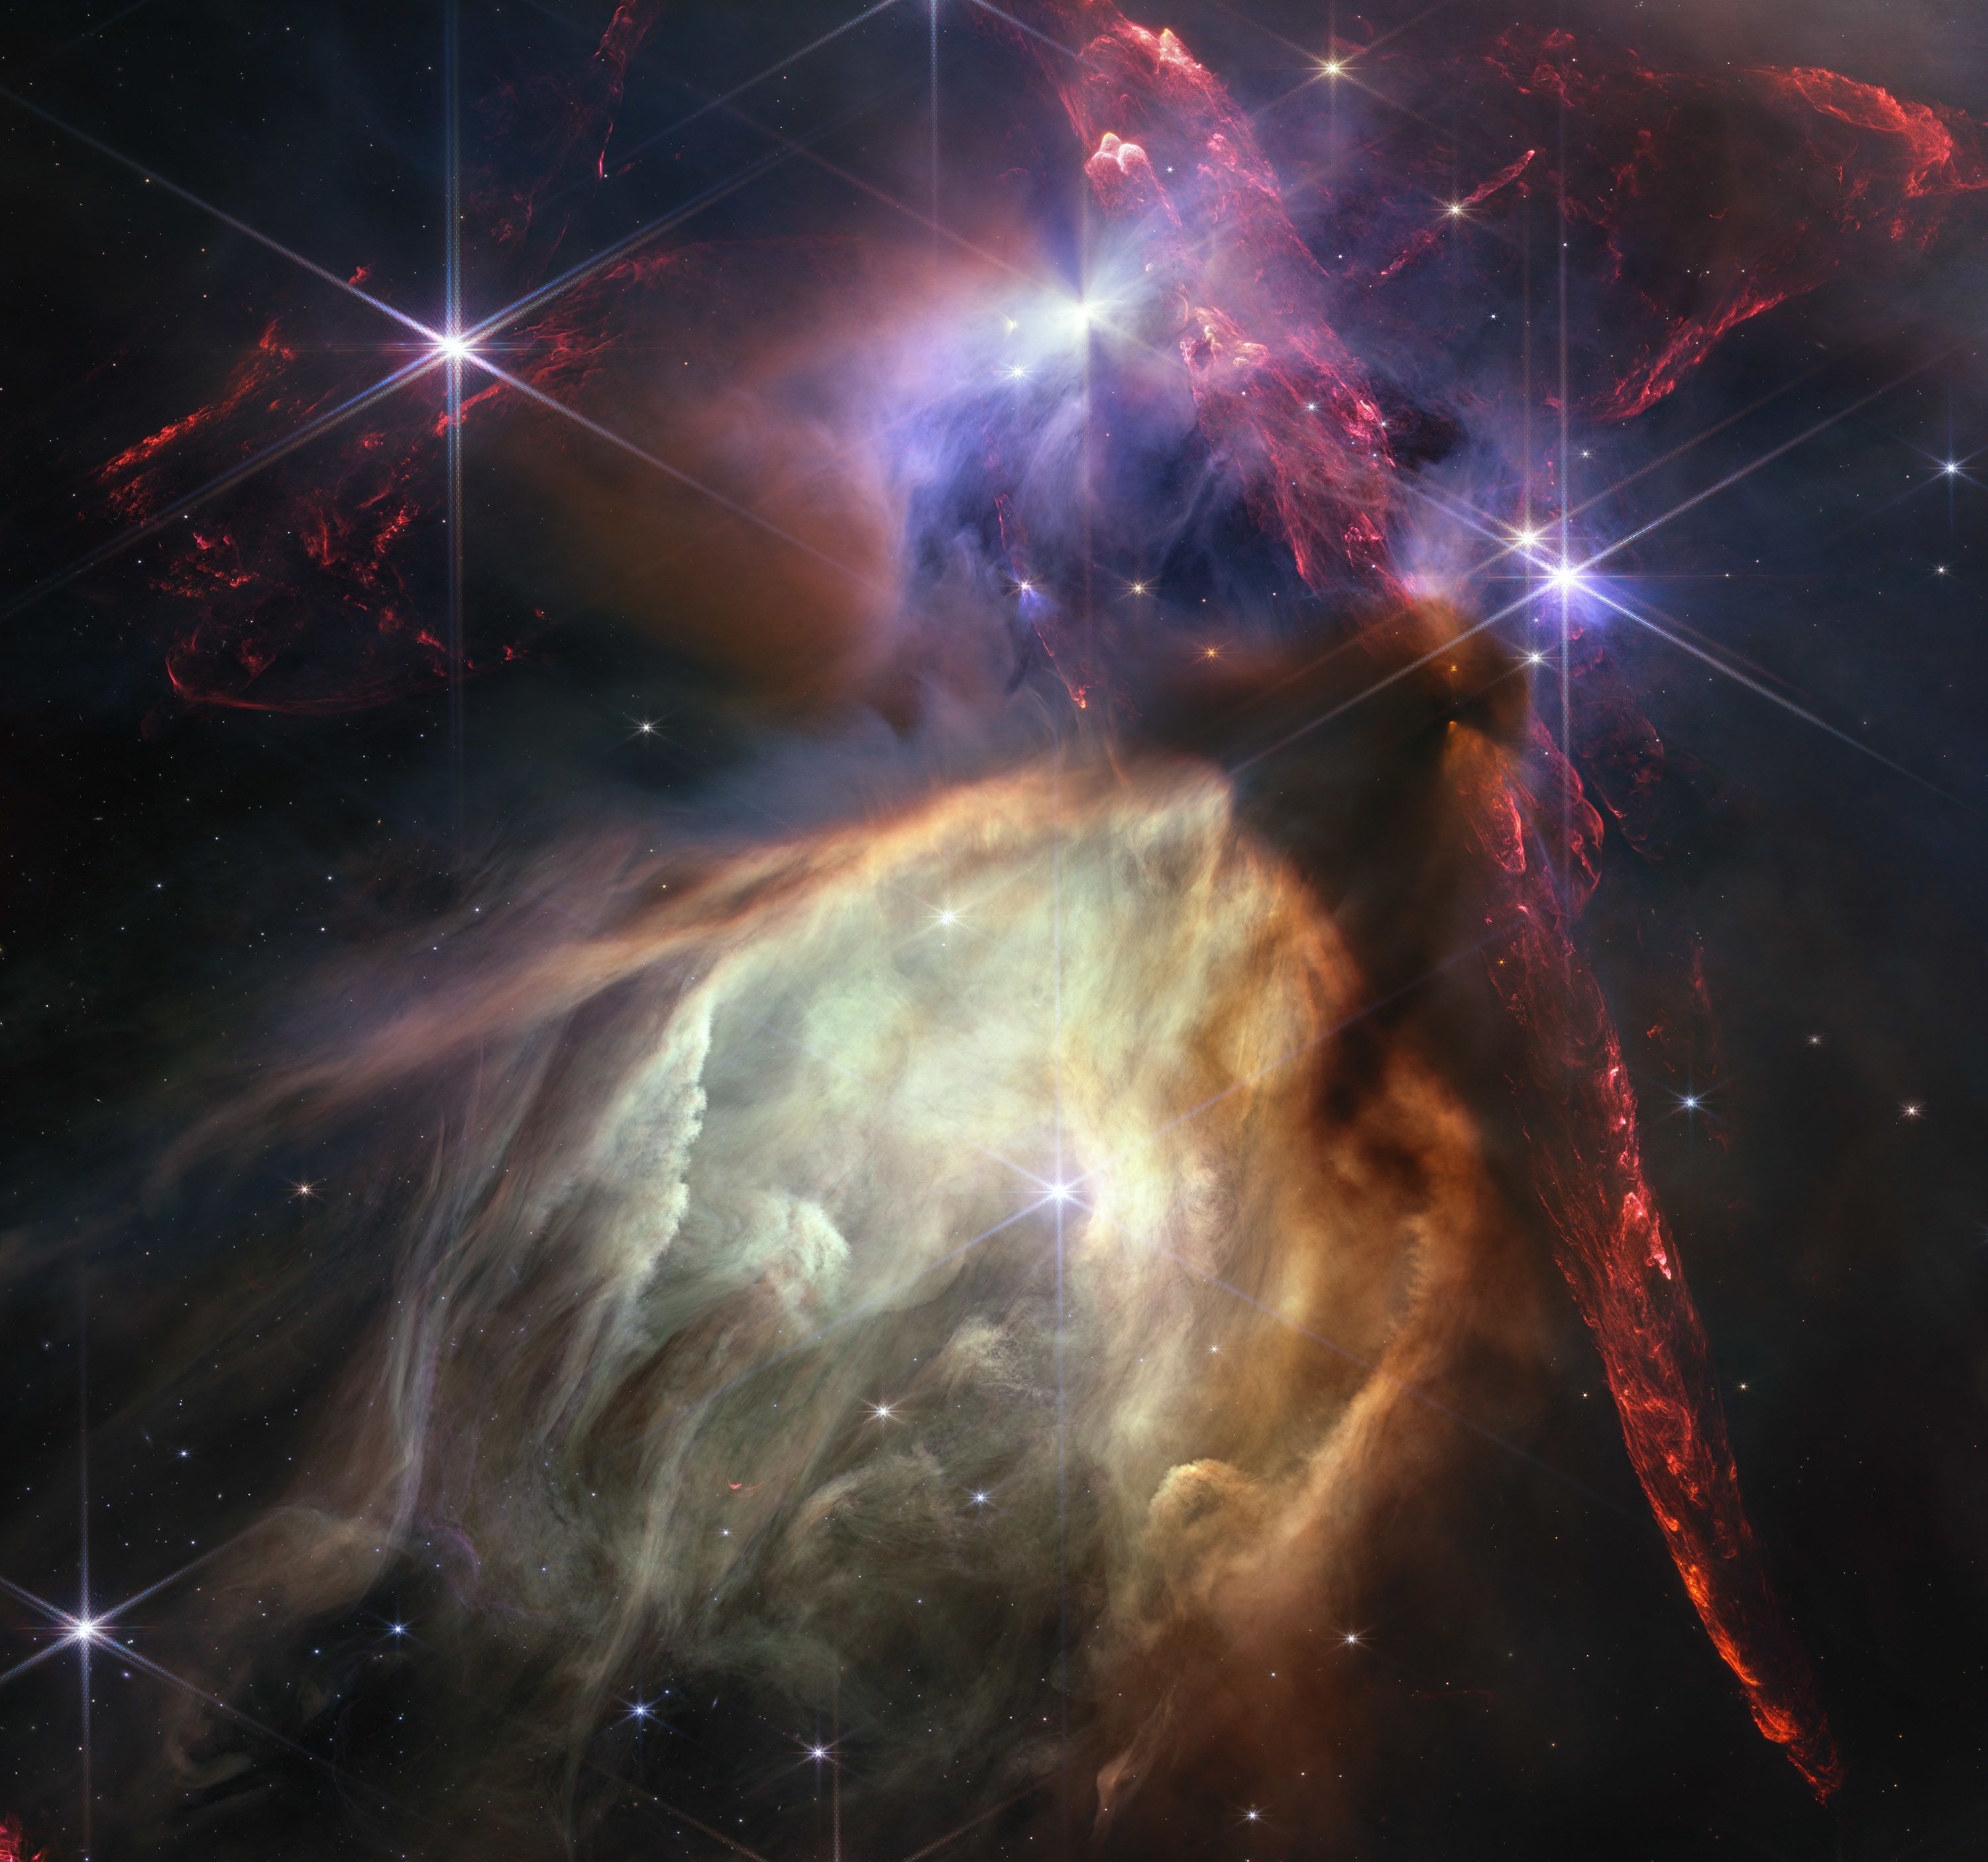 https://media.cnn.com/api/v1/images/stellar/prod/230712111524-webb-space-telescope-rho-ophiuchi.jpg?c=original